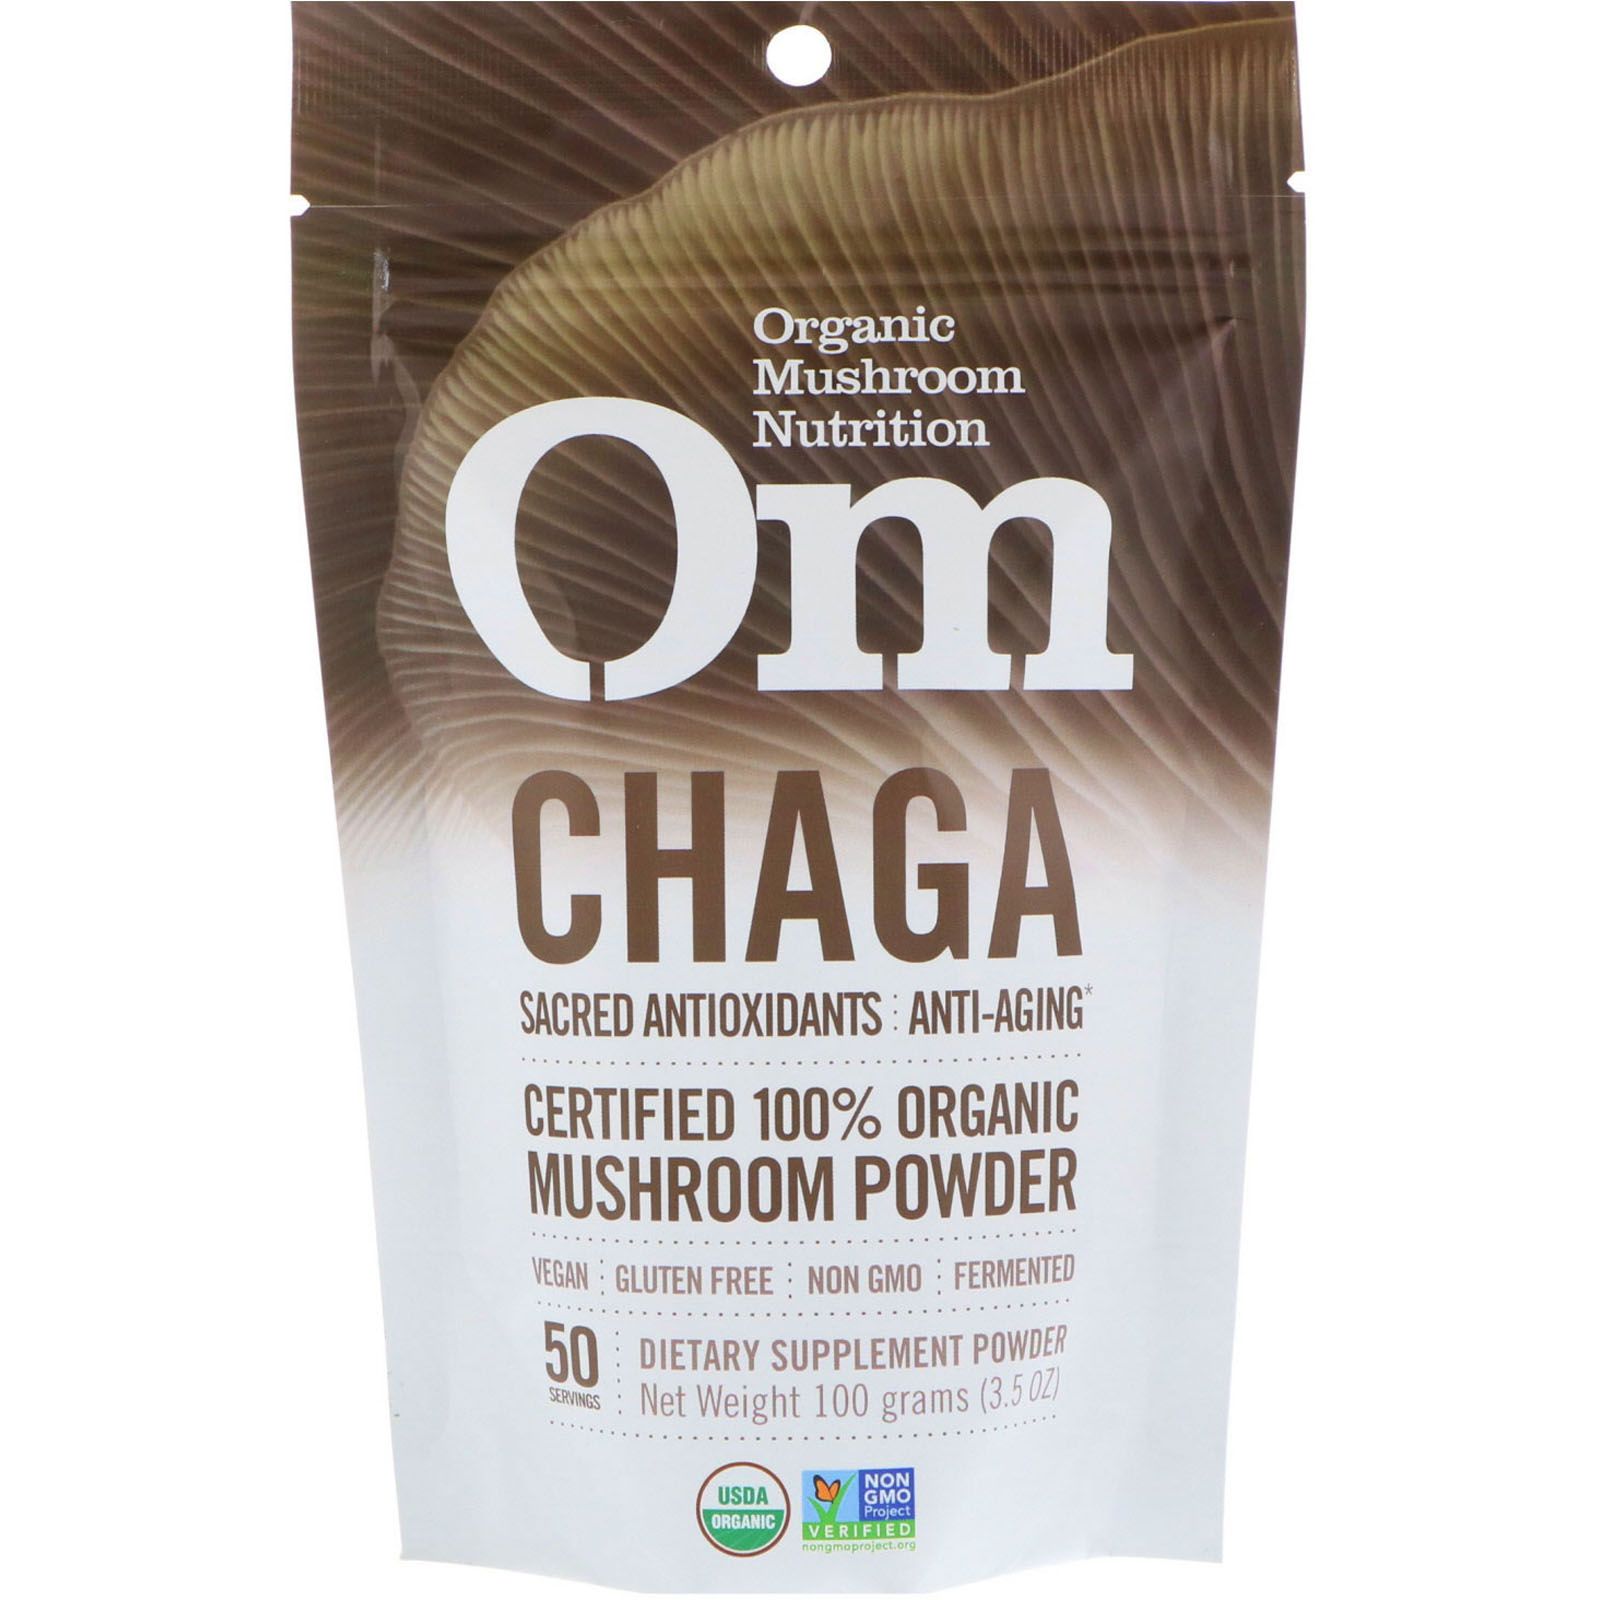 Organic Mushroom Nutrition Chaga Certified 100% Organic Mushroom Powder 3.5 oz (100 g) цена и фото